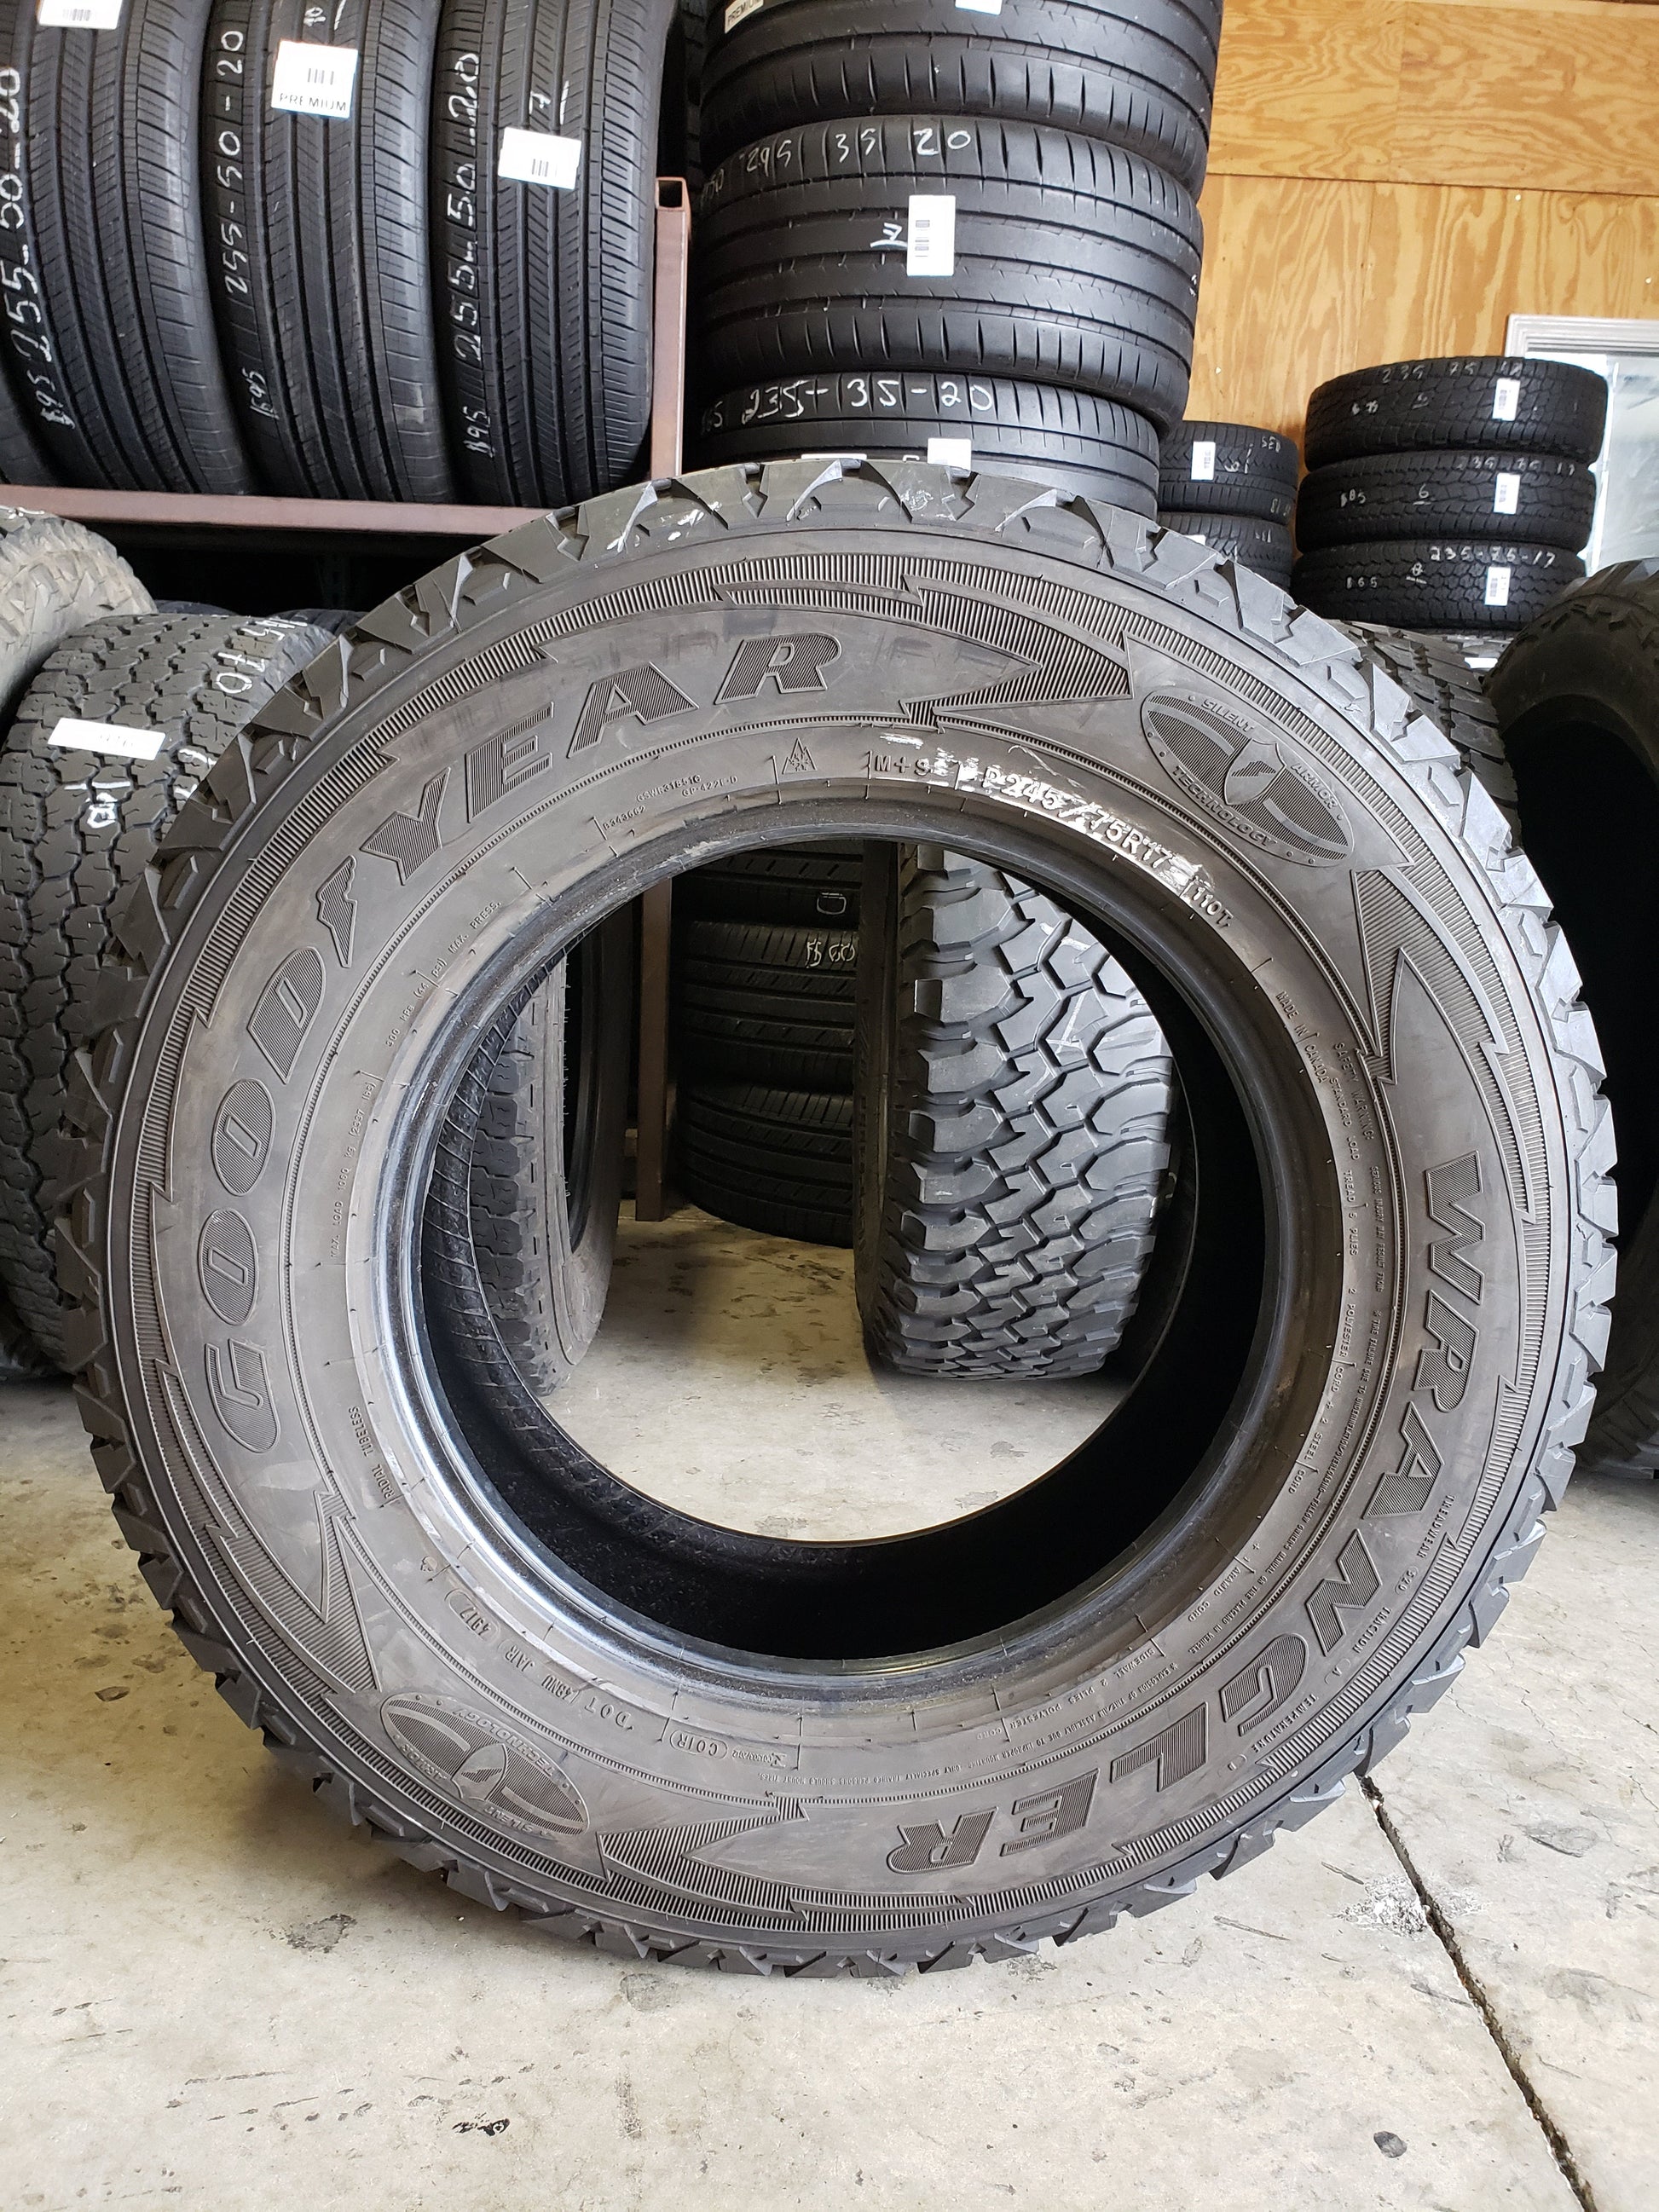 SINGLE 245/75R17 Goodyear Wrangler 110 T SL - Premium Used Tires – High  Tread Used Tires